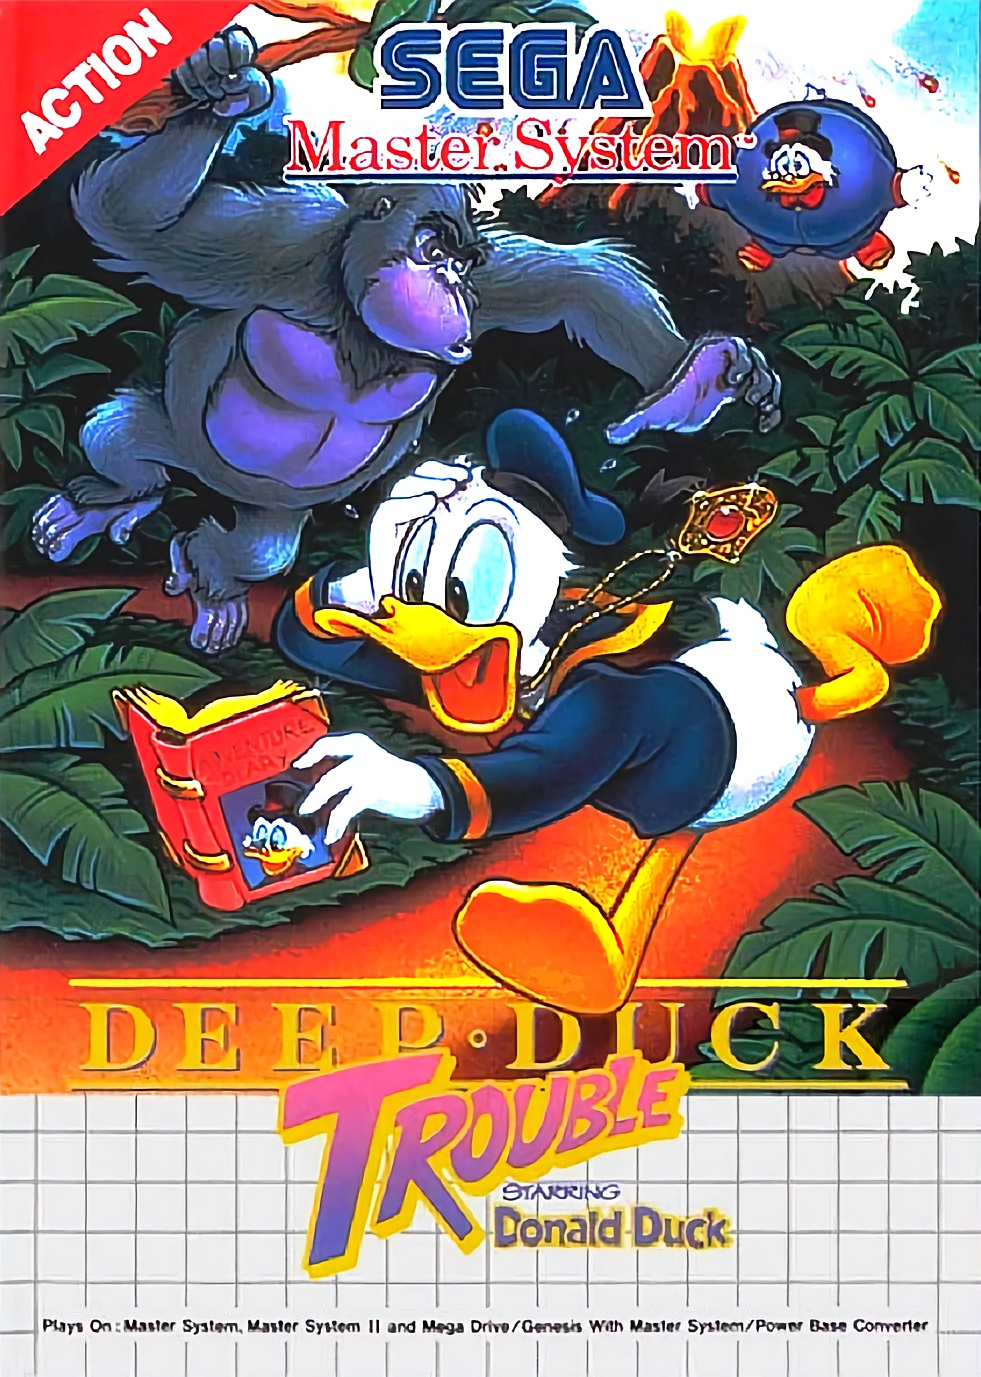 Deep Duck Trouble starring Donald Duck